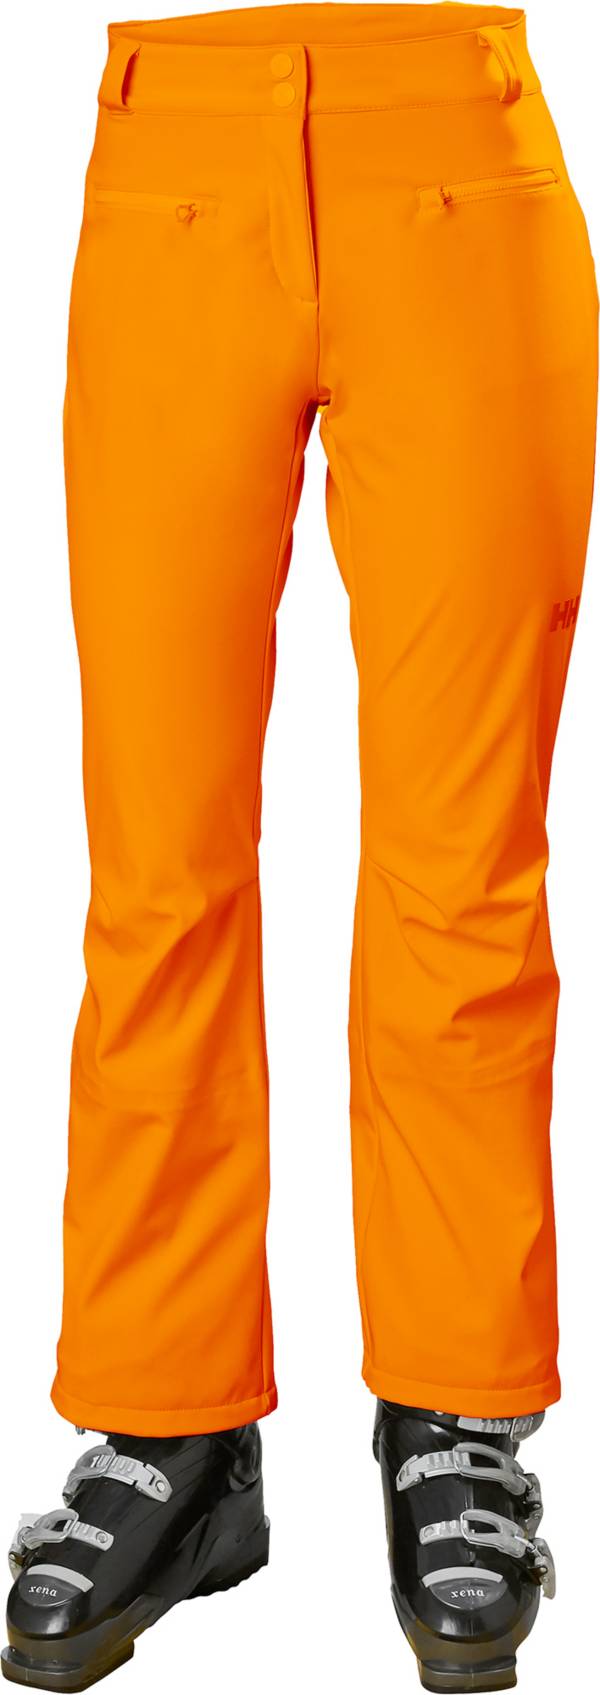 Helly Hansen Women's Bellissimo 2 Ski Pants product image